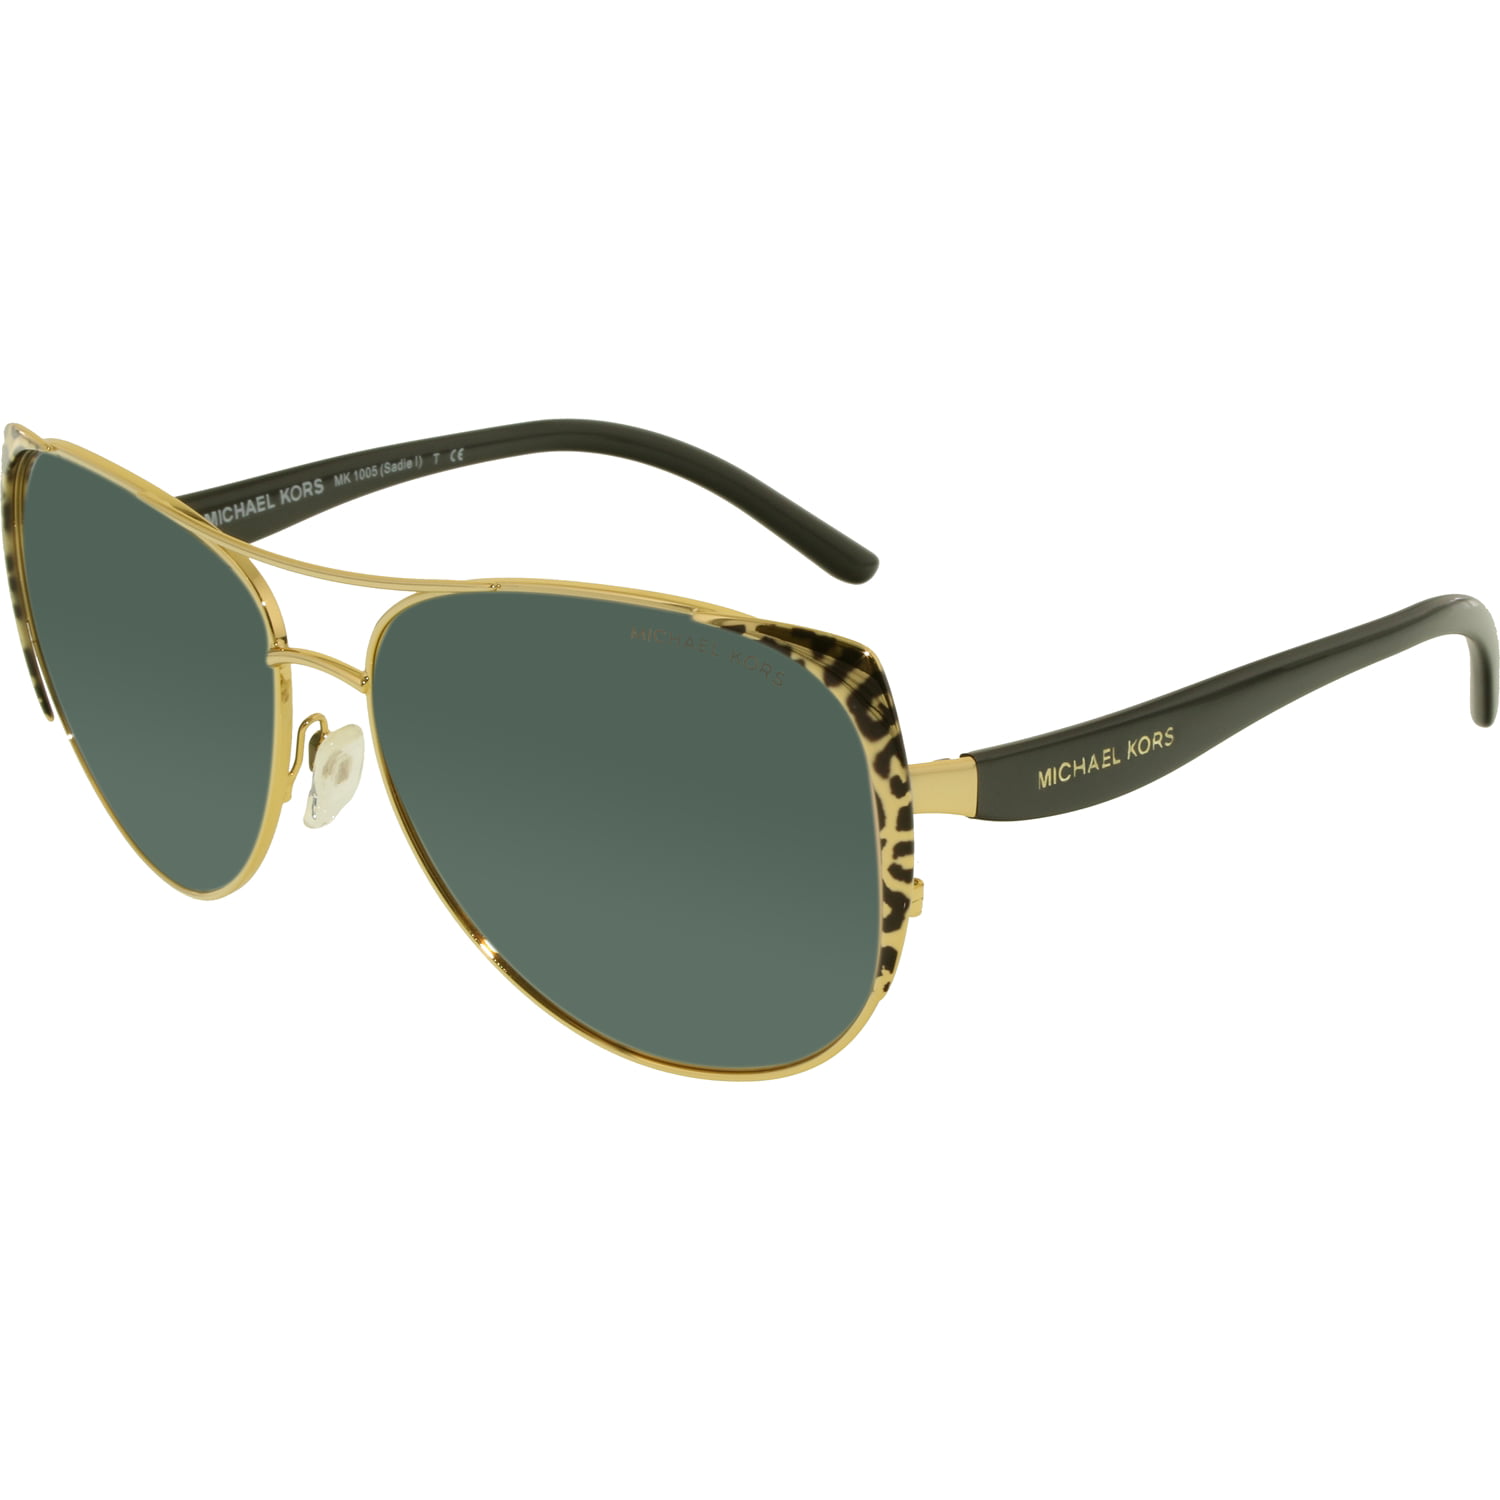 Michael Kors Women S Sadie Mk1005 1057r5 59 Gold Aviator Sunglasses Walmart Canada